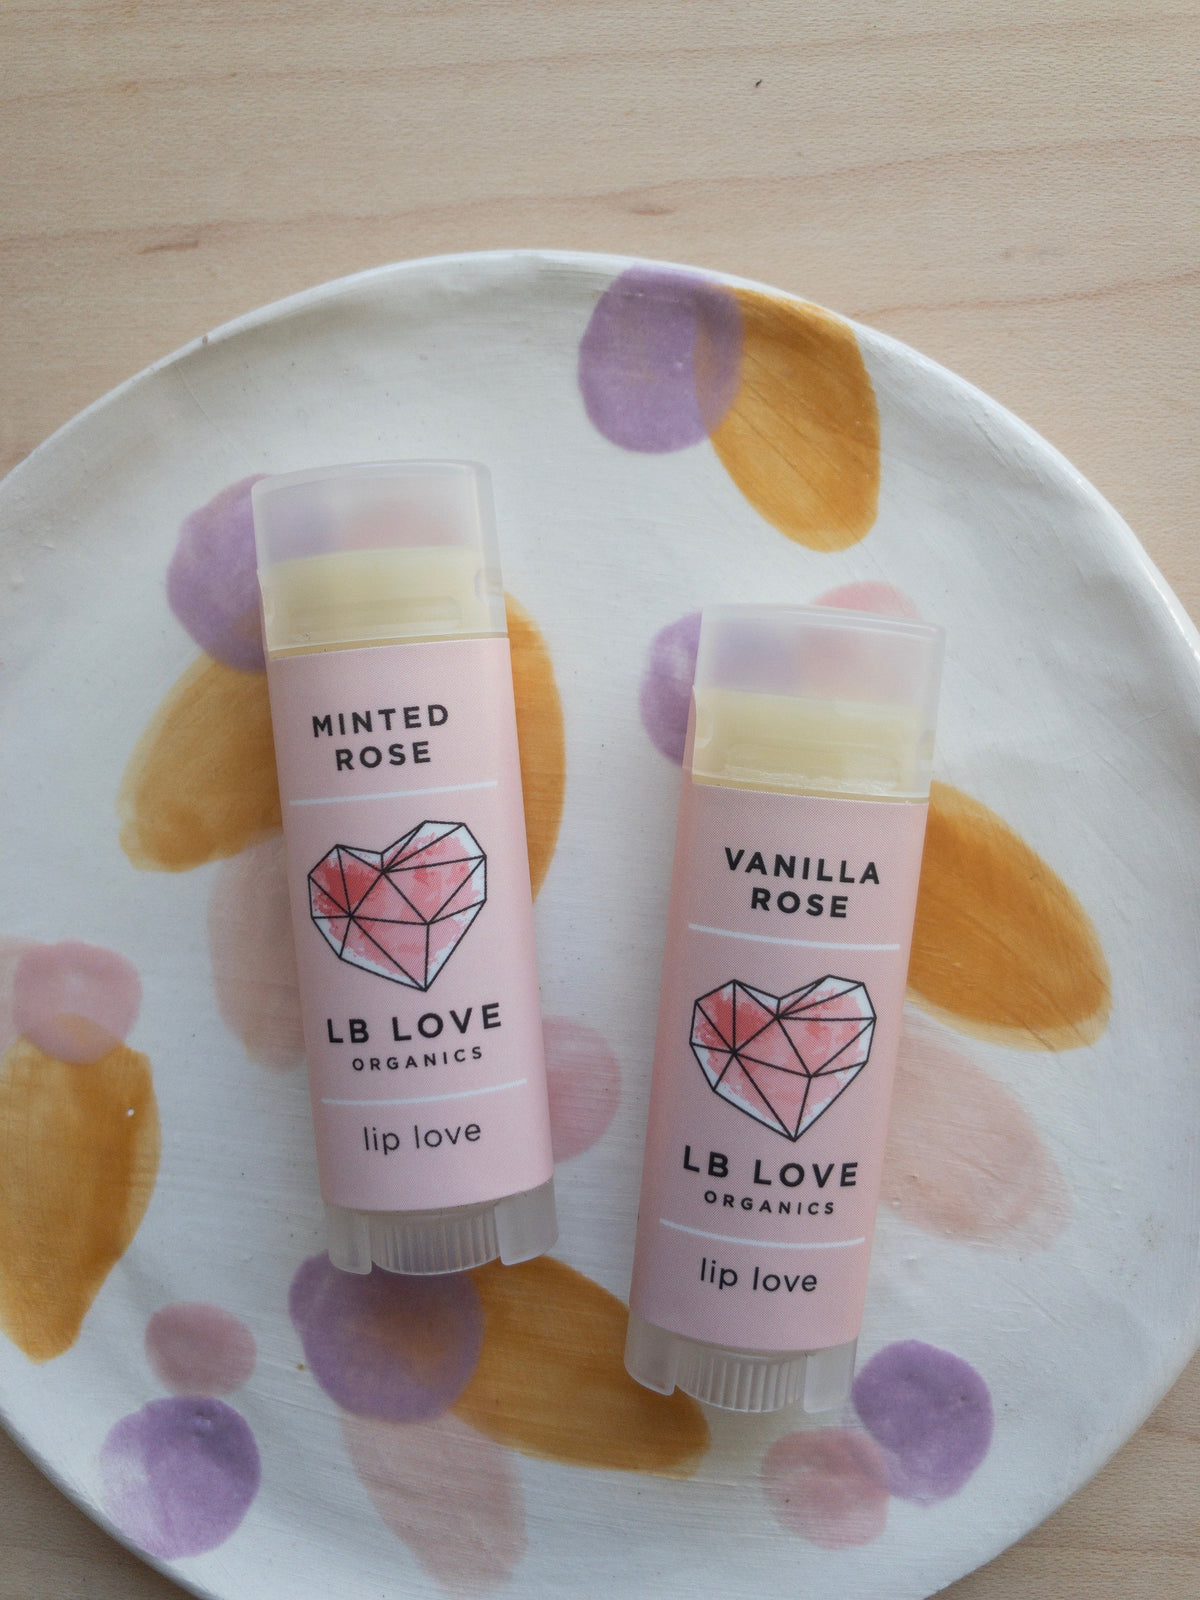 LB Love Organics lip love lip balm Minted Rose Vanilla Rose duo treatment dry lips